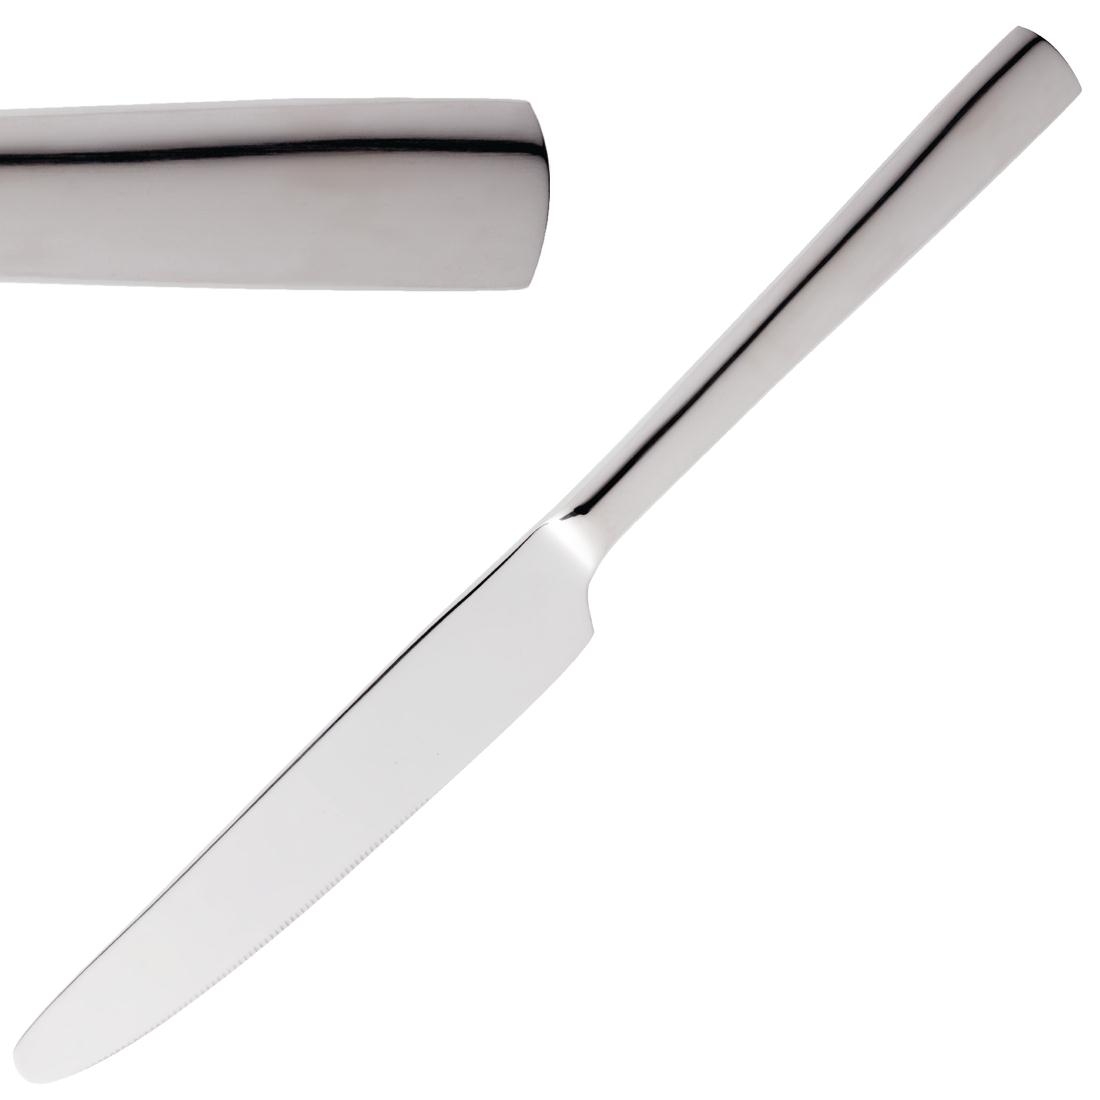 Amefa Moderno Table Knife